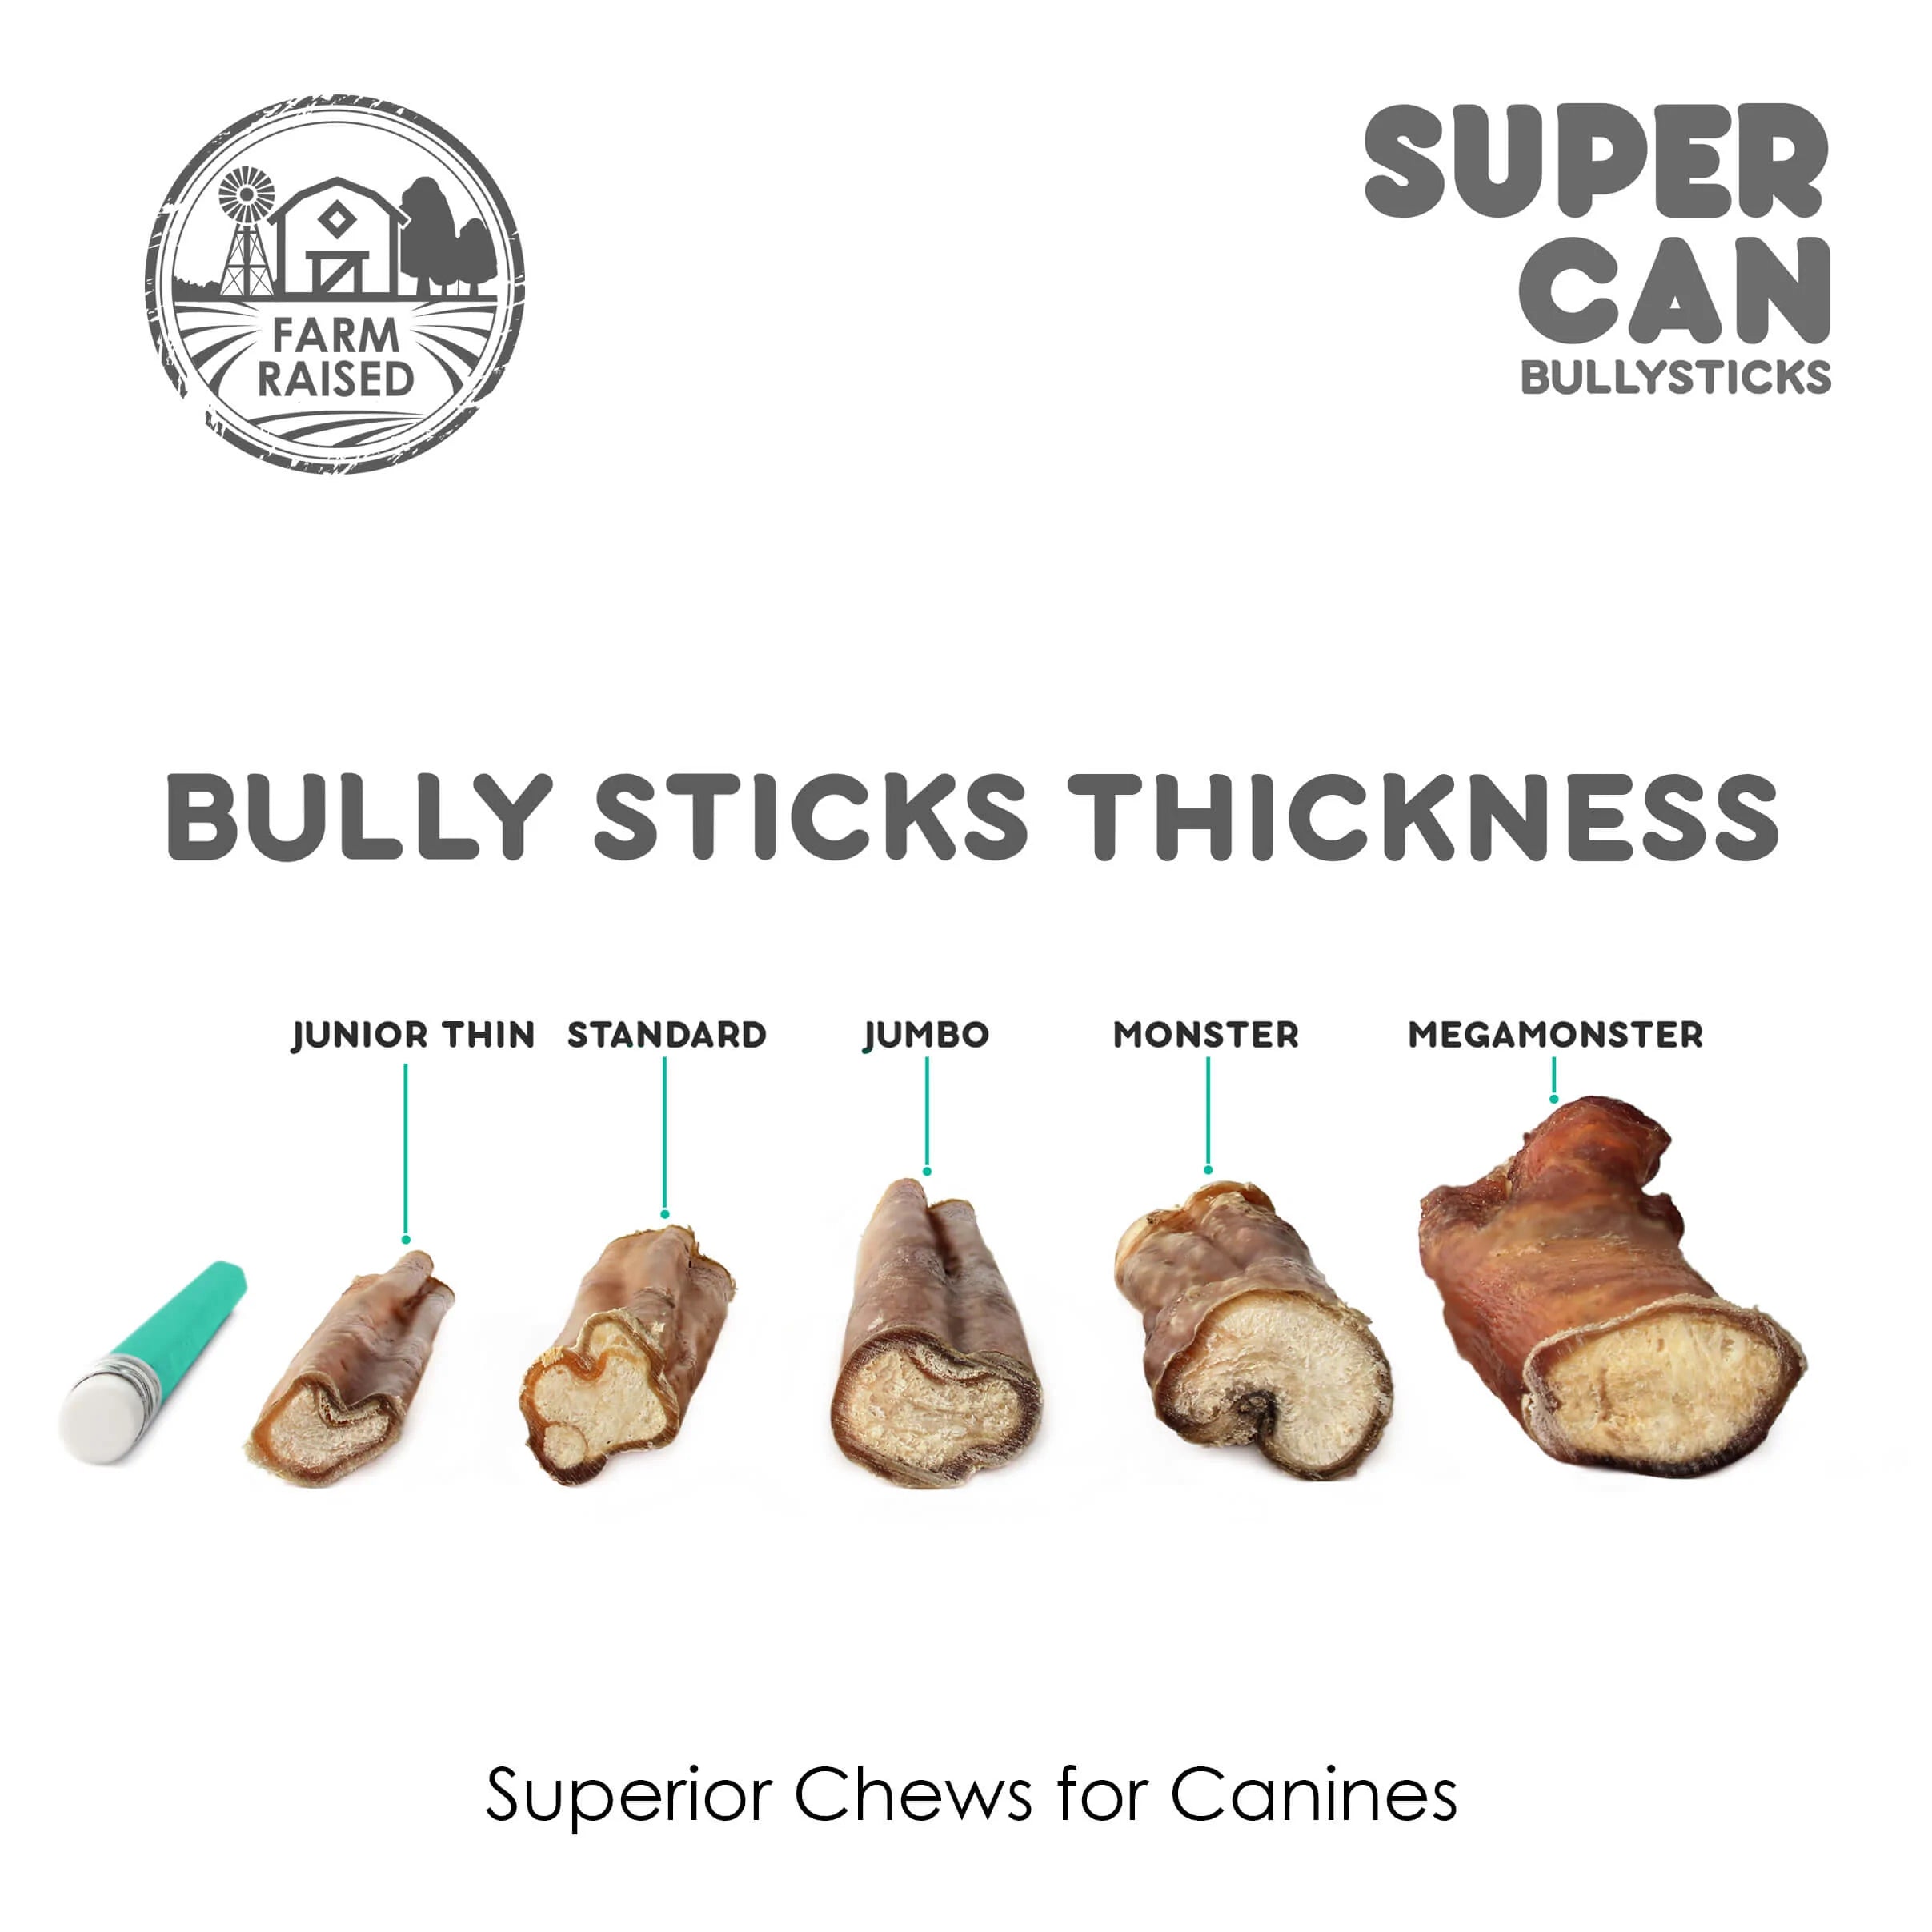 Supercan Bully Sticks